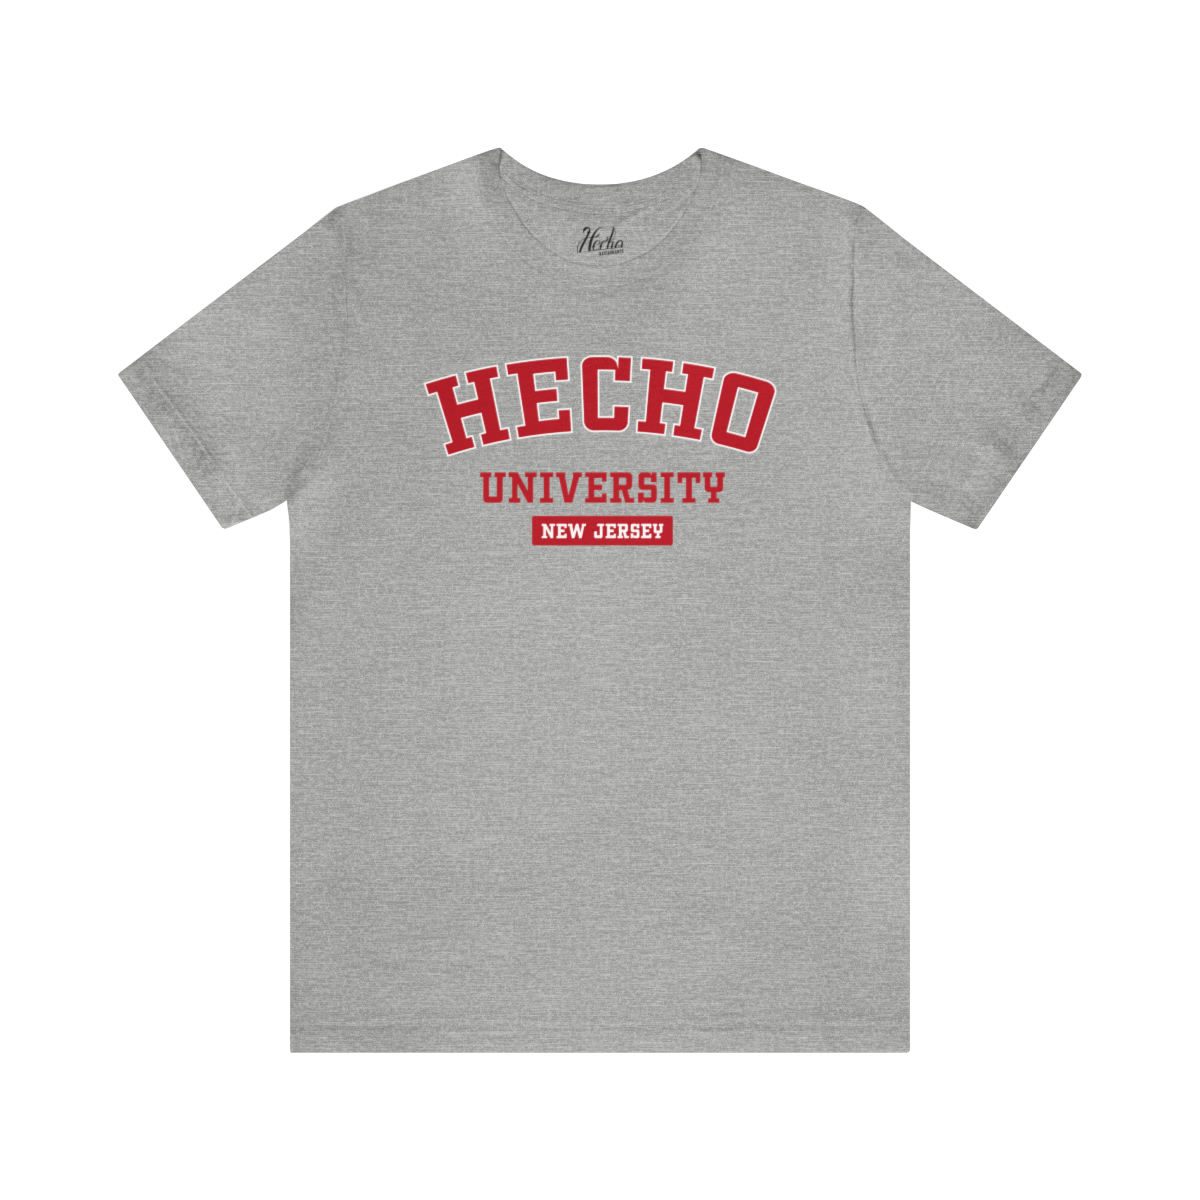 Hecho University – NJ